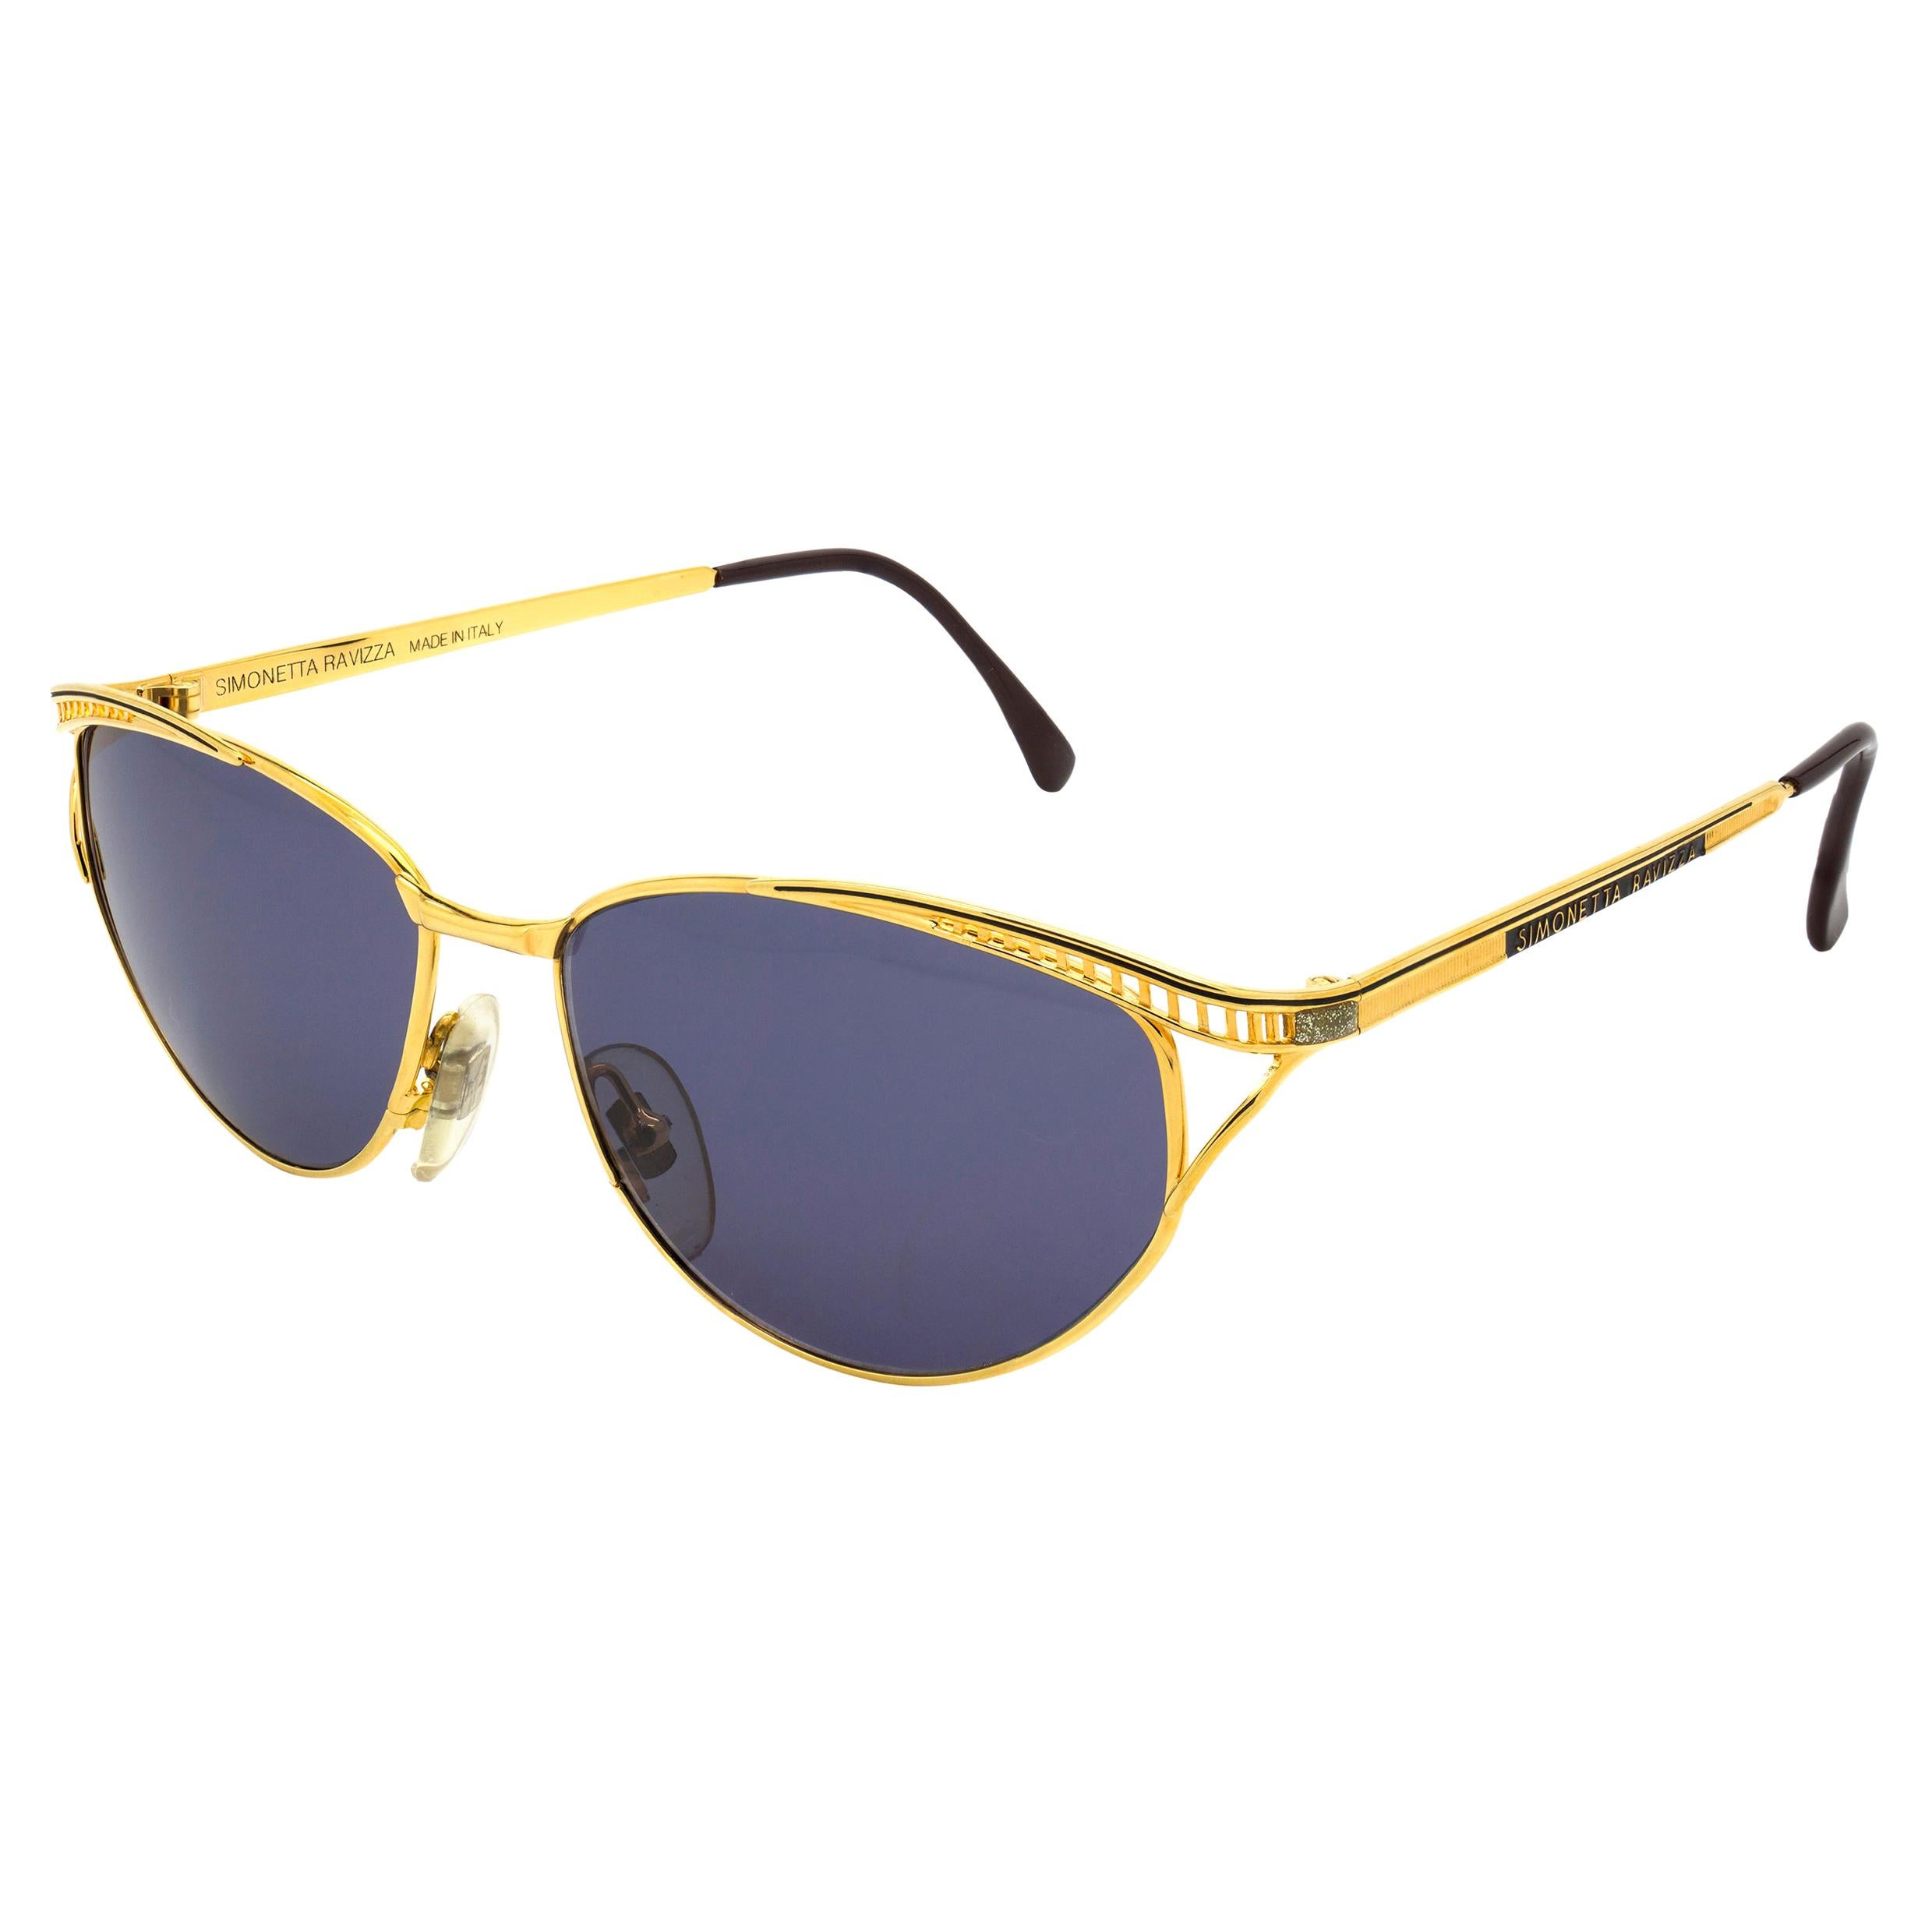 Simonetta Ravizza golden cat eye sunglasses For Sale